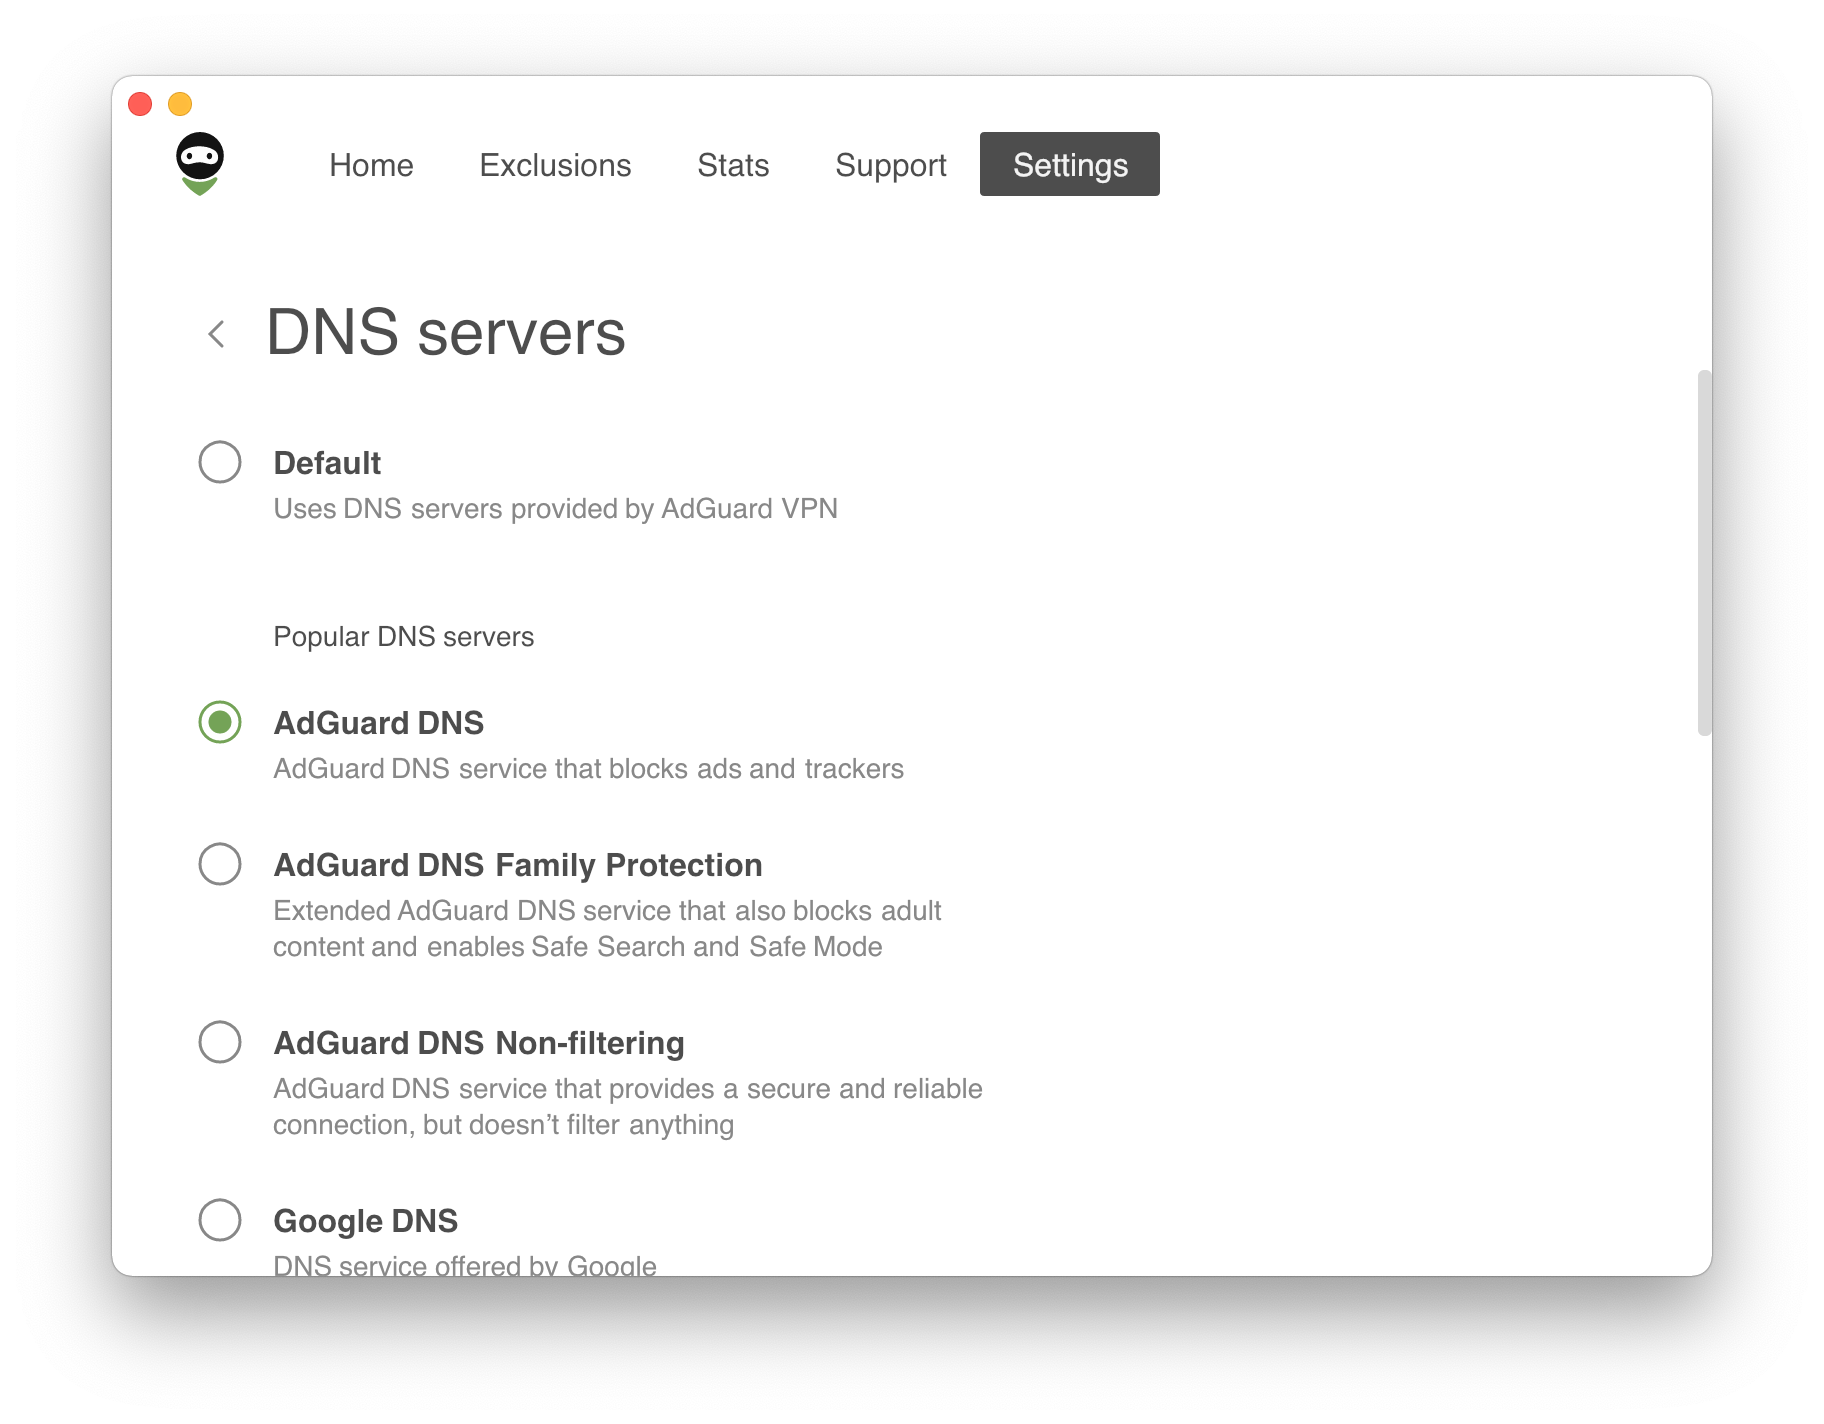 DNS 服务器